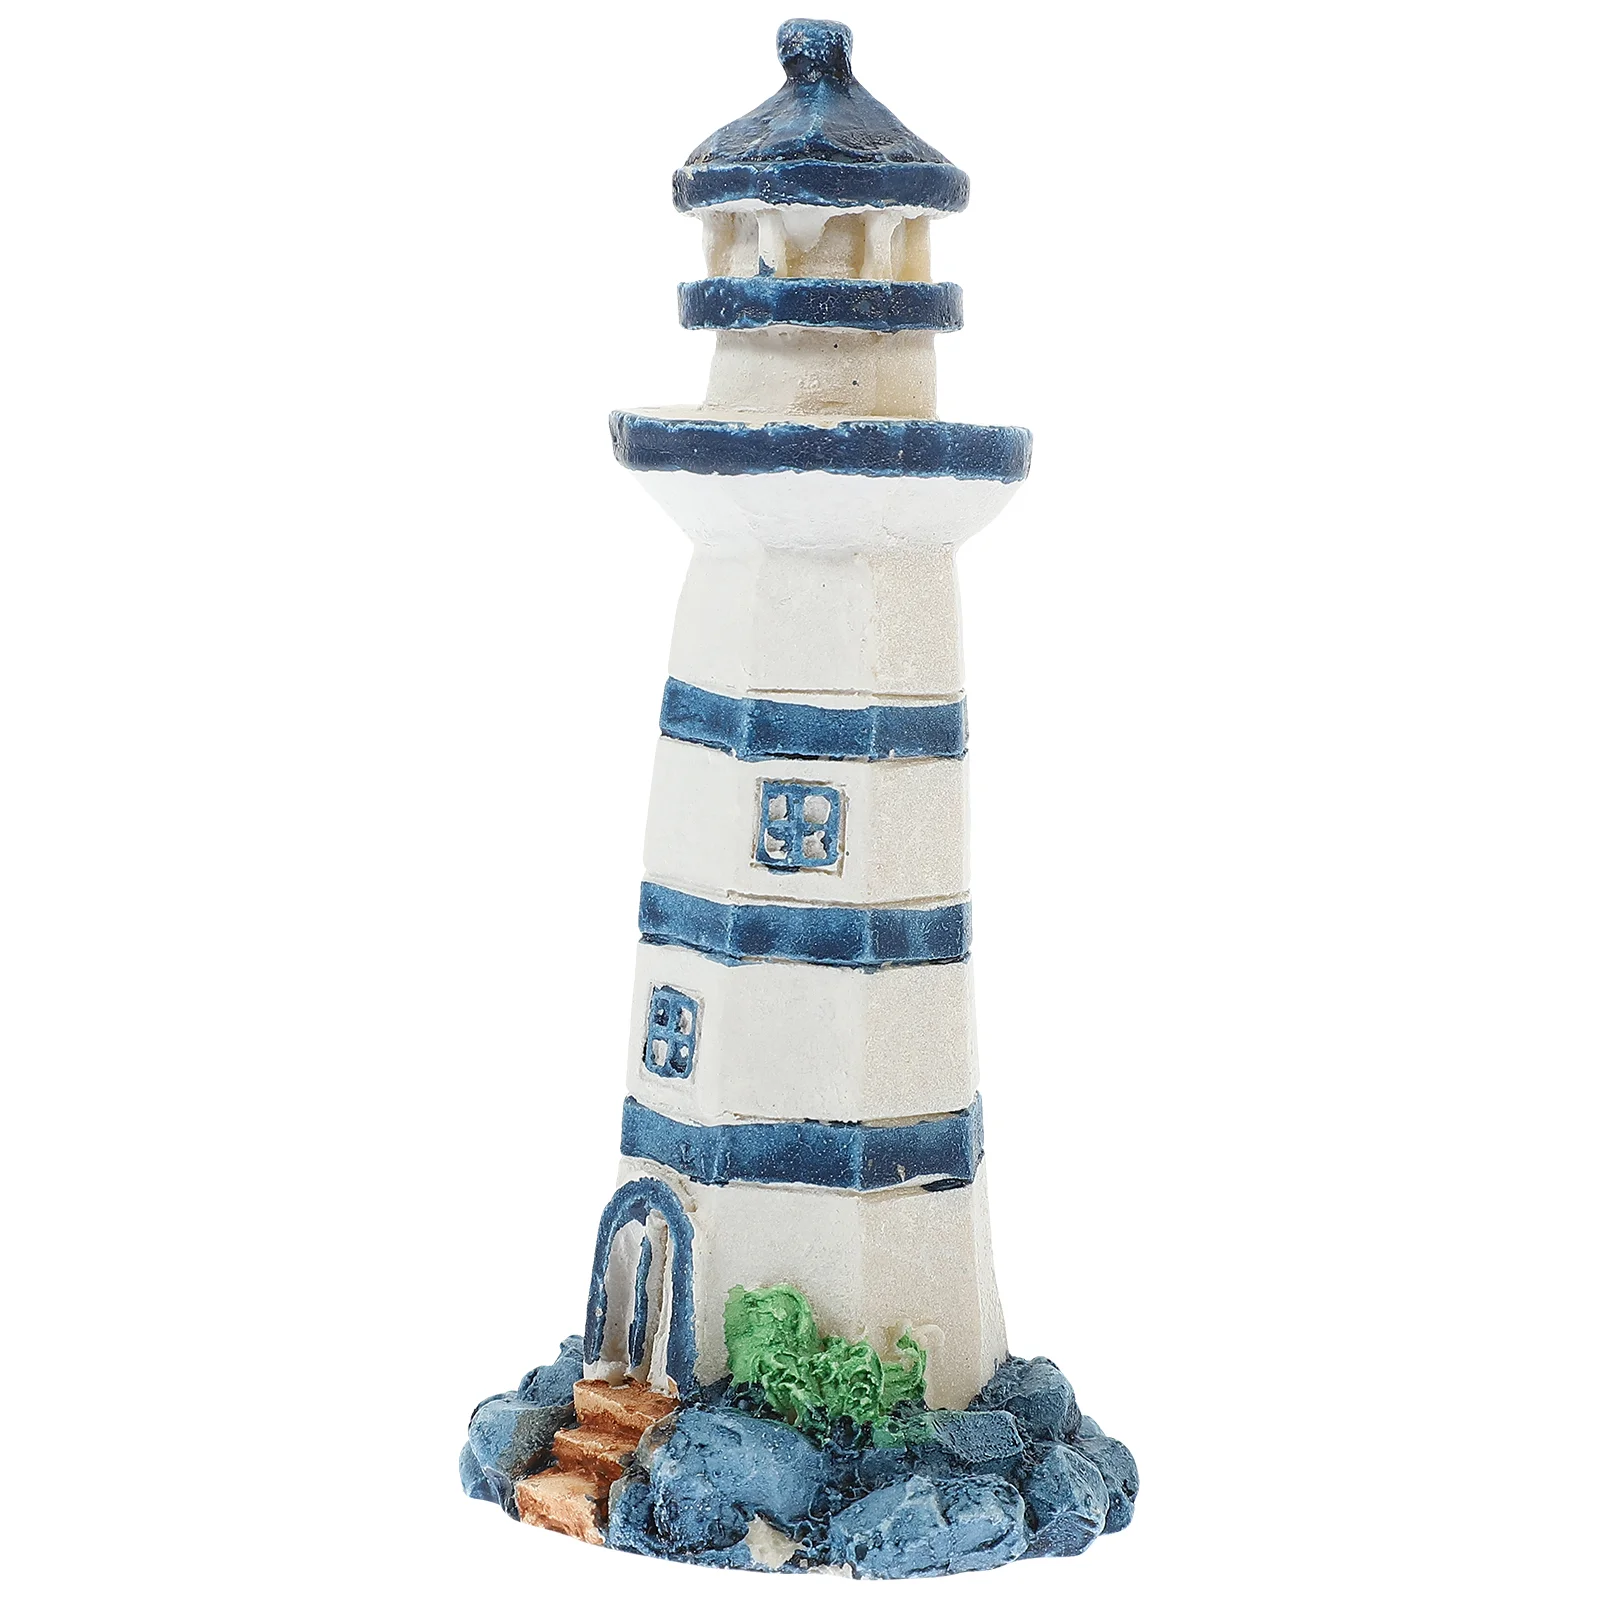 

Small Component Sea Theme Ornament Ocean Decor Painted Lighthouse Resin Coastal Home Decorative